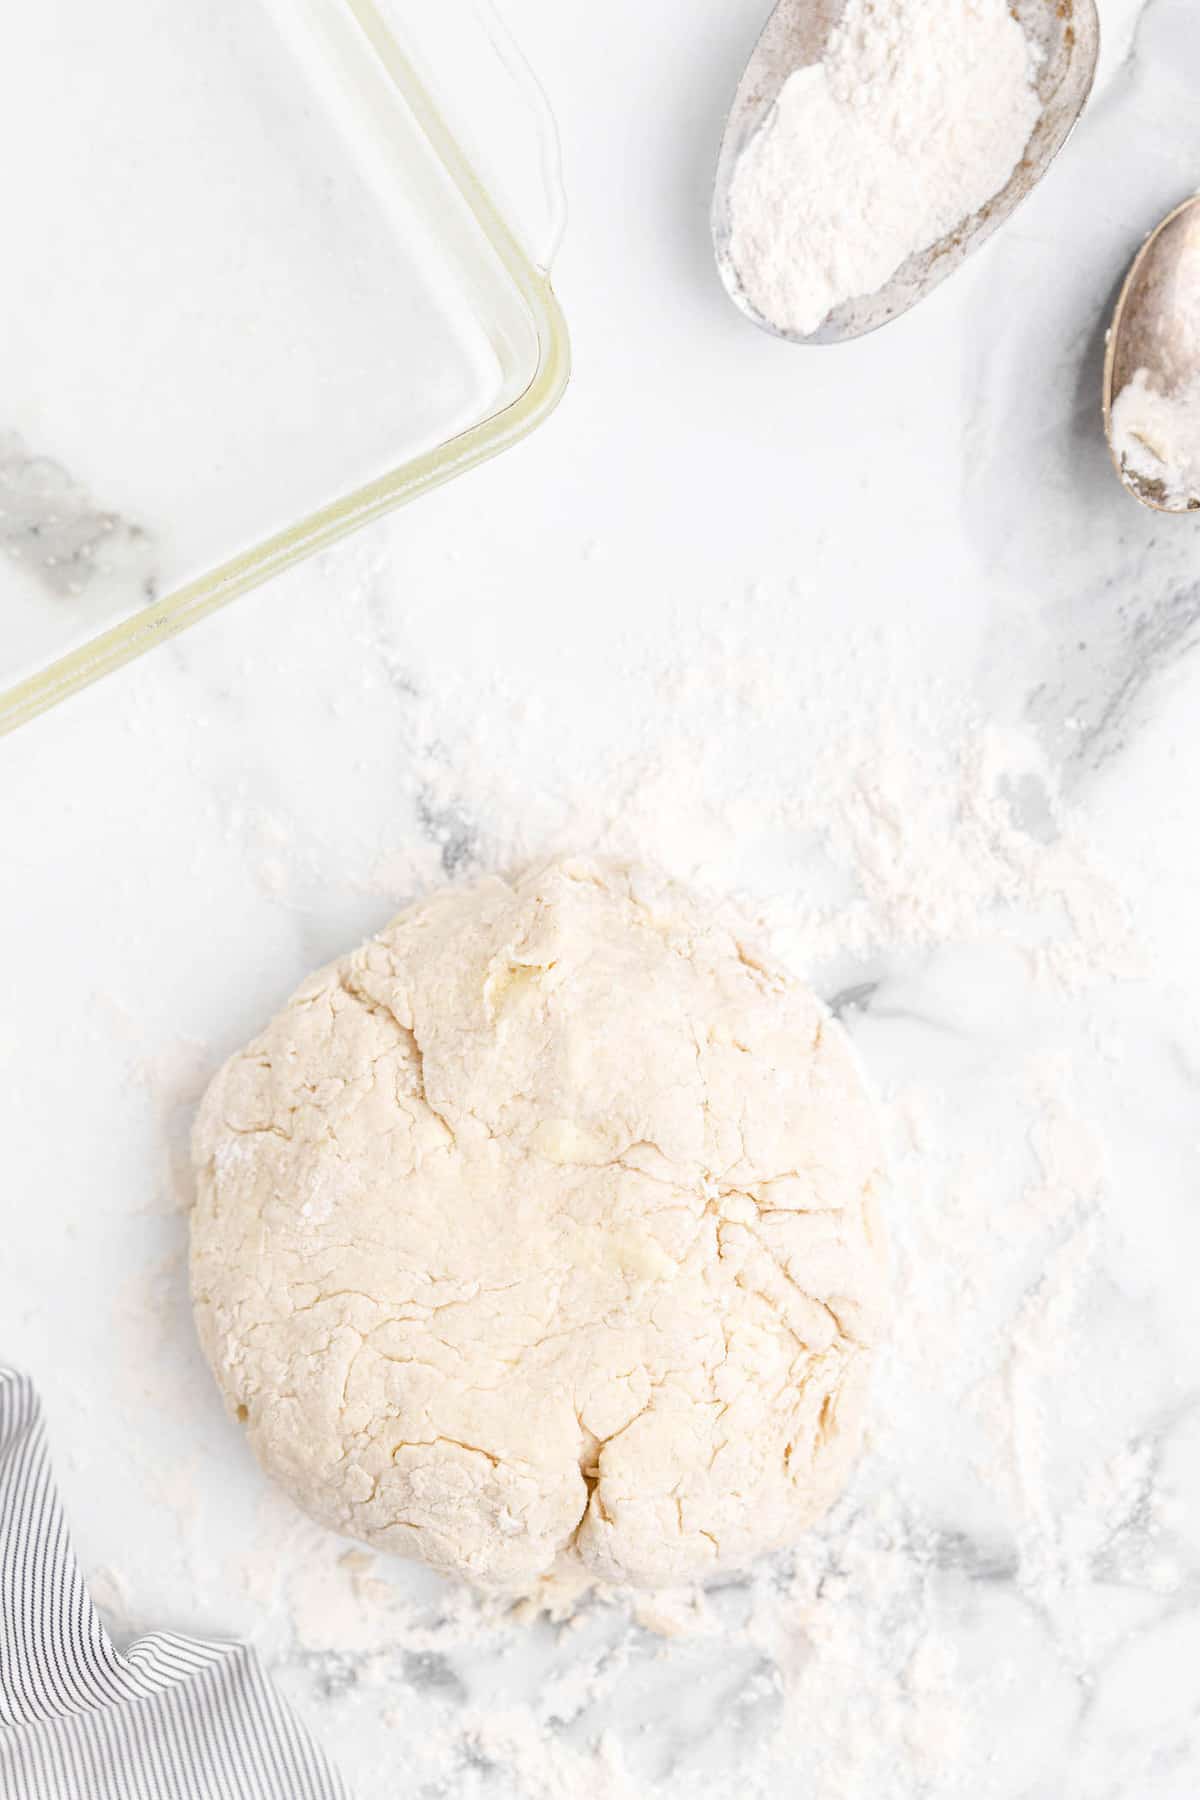 make a ball of dough